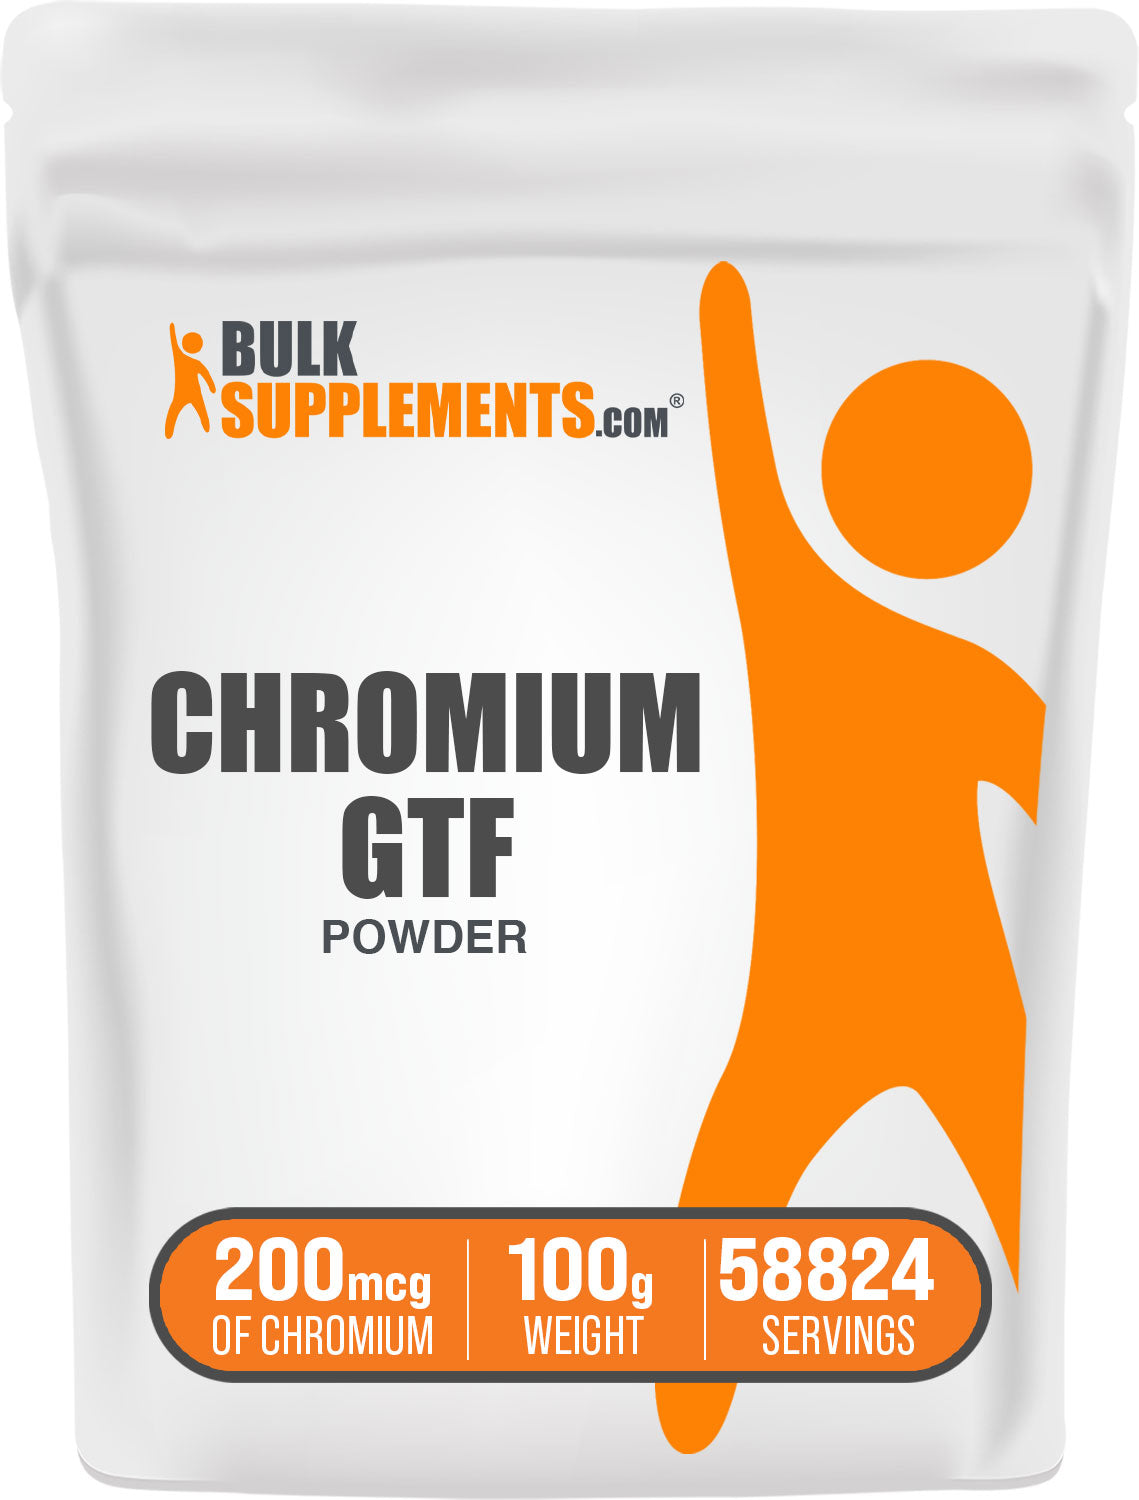 BulkSupplements.com Chromium GTF powder 100g bag